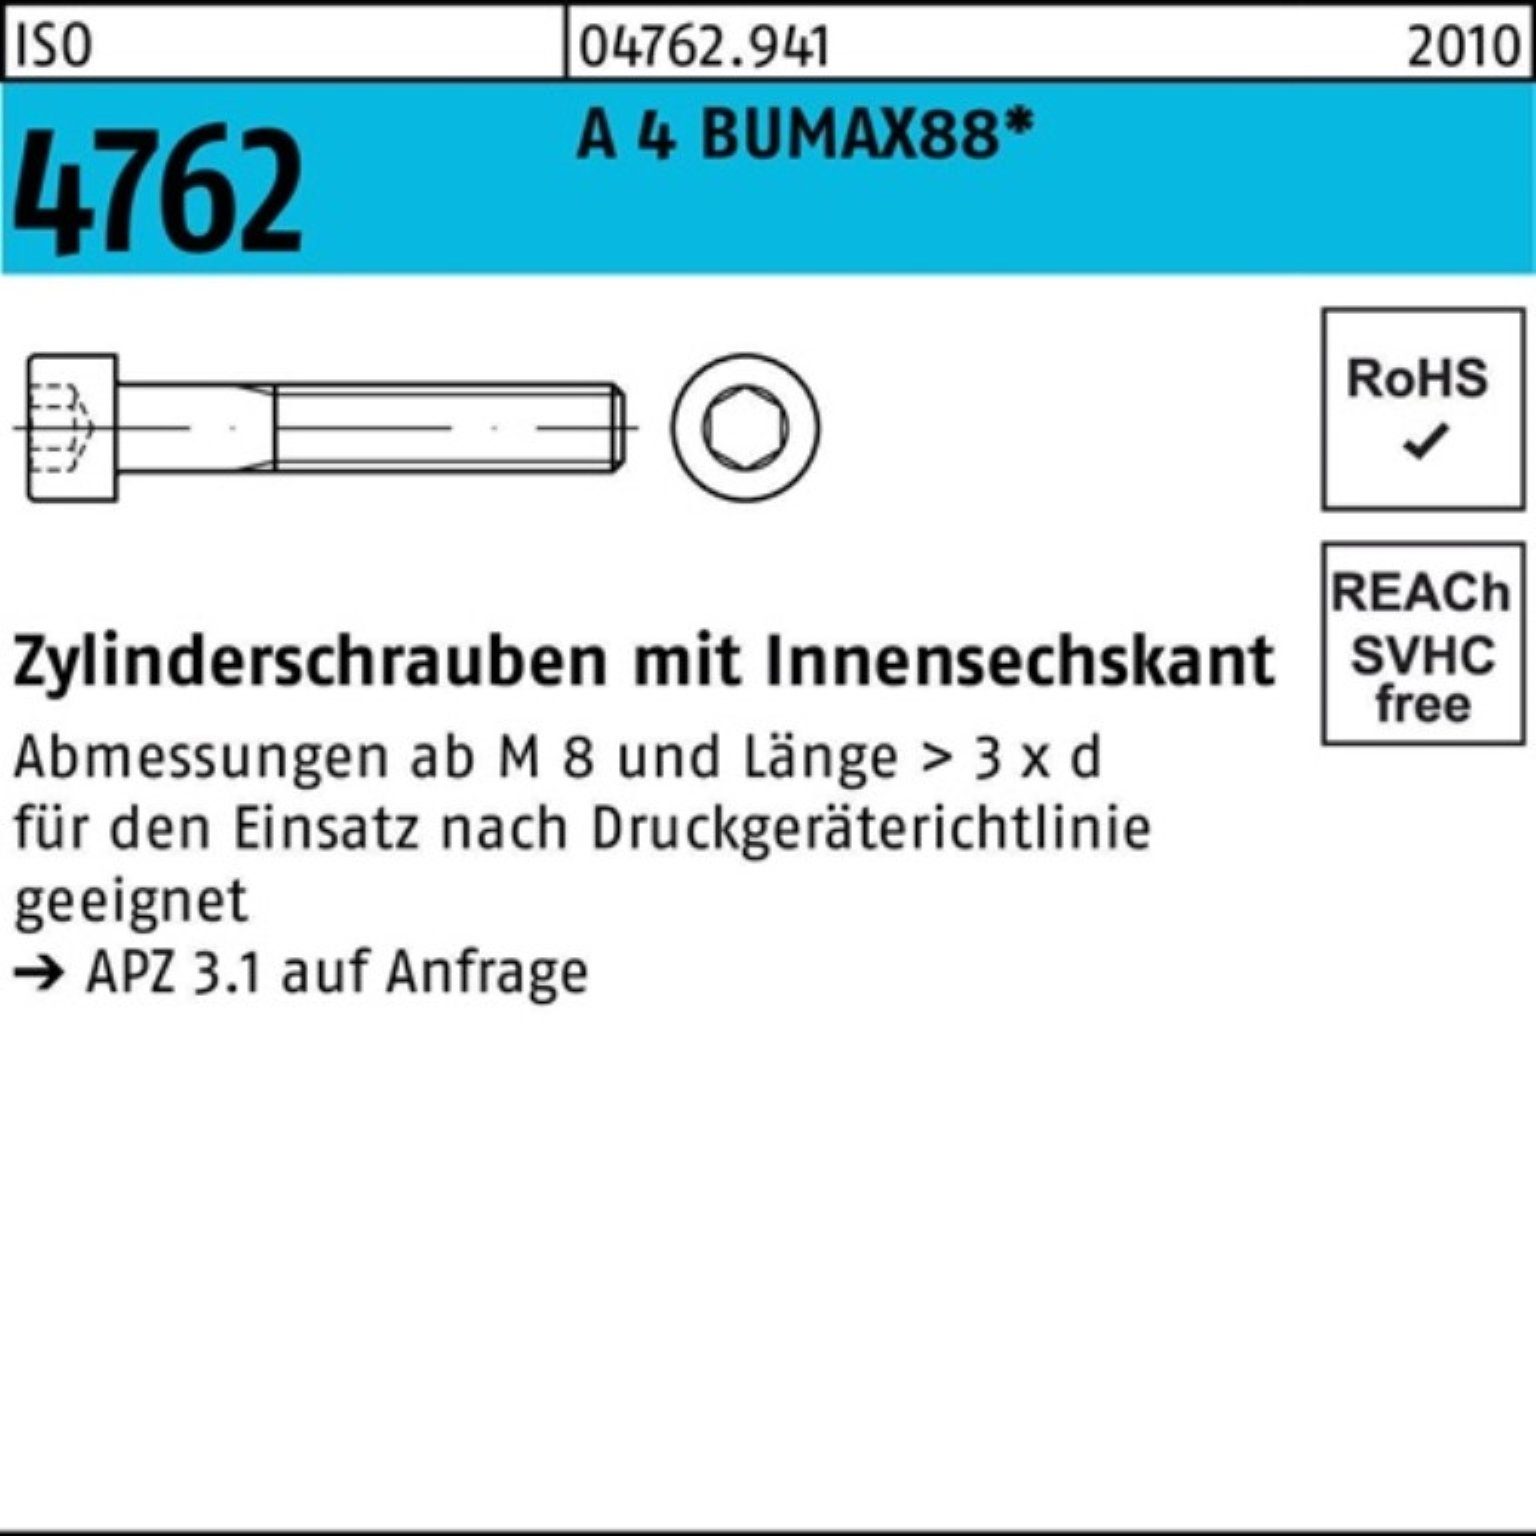 Bufab Zylinderschraube 100er Pack Zylinderschraube ISO 4762 Innen-6kt M6x 35 A 4 BUMAX88 100